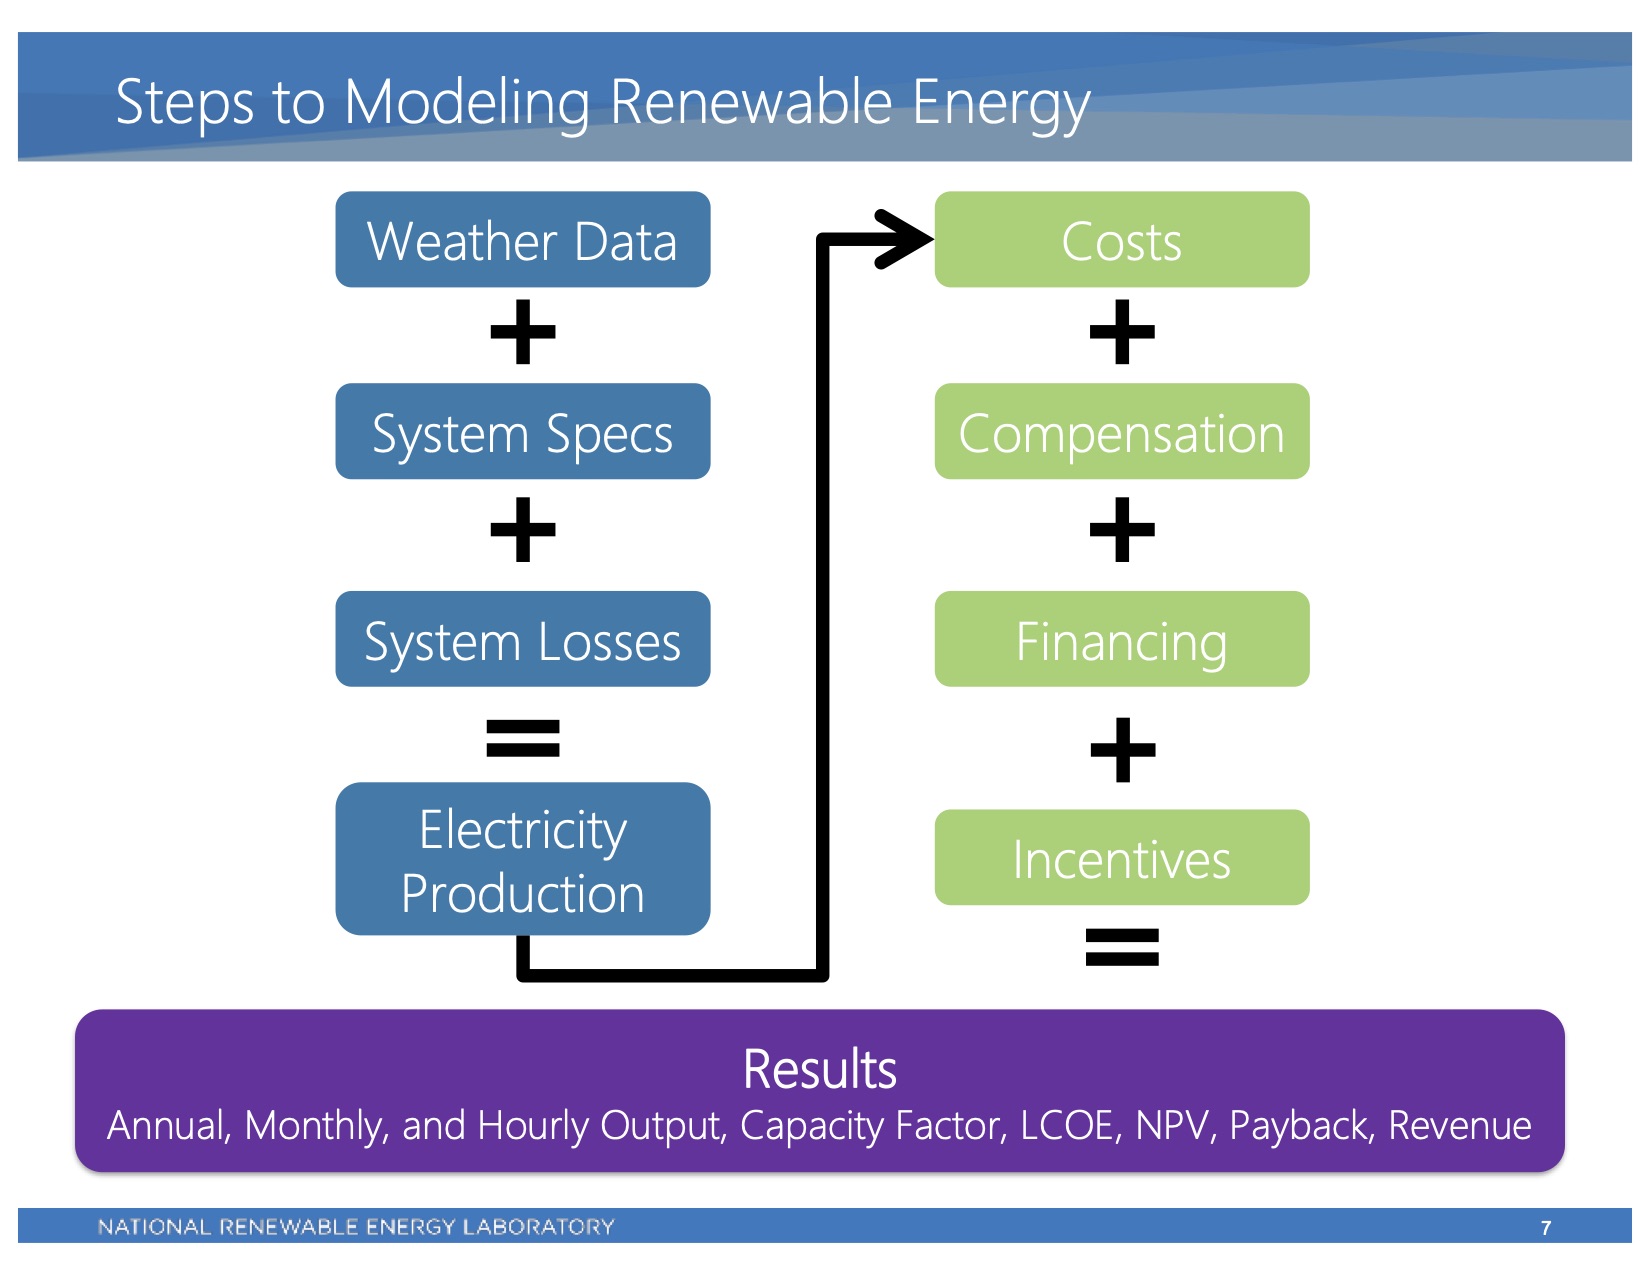 Steps to modeling renewable energy